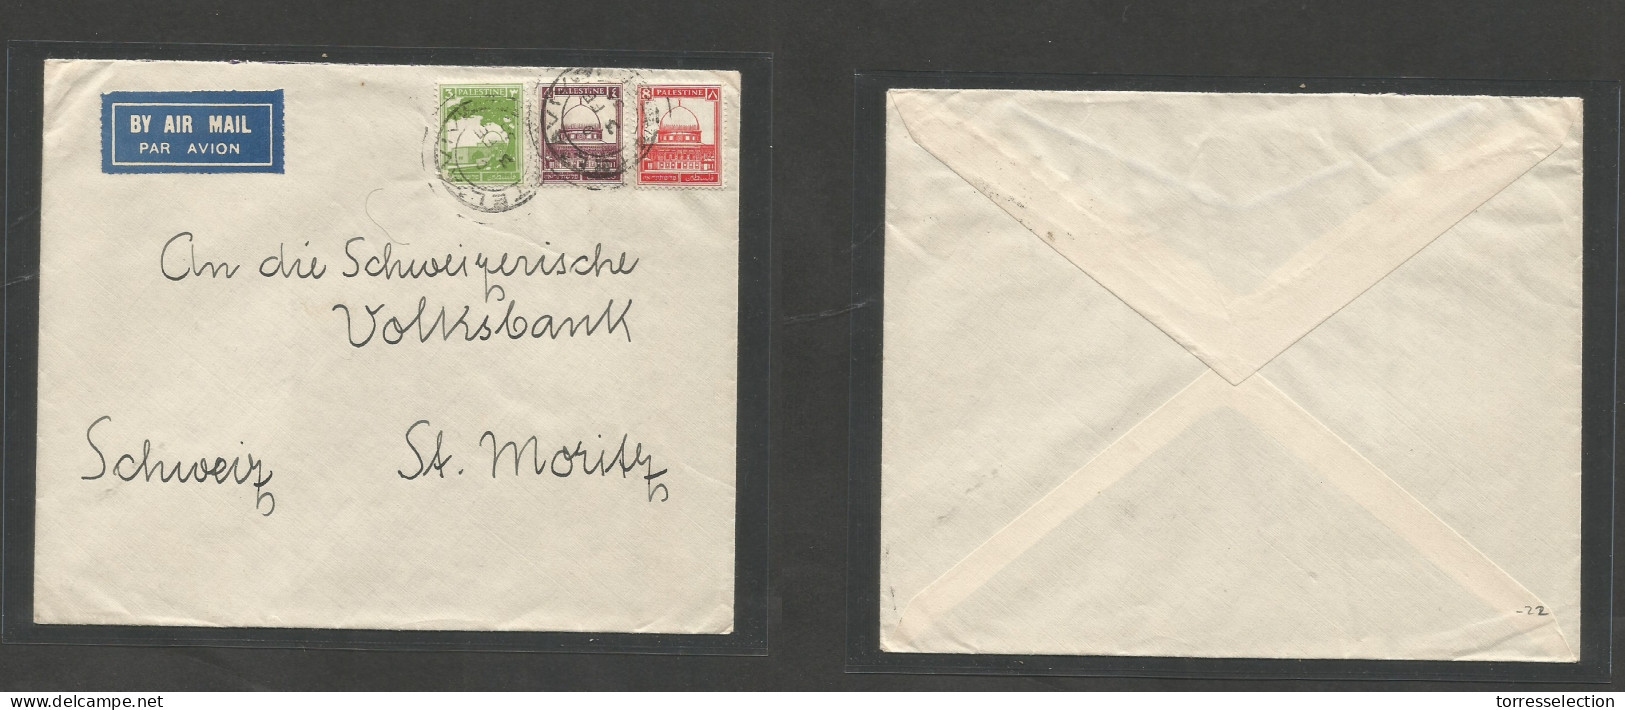 PALESTINE. 1935 (3 Febr) Tel Aviv - Switzerland, St. Moritz. Air Multifkd Tricolor Envelope, Tied Cds. VF Usage. SALE. - Palästina